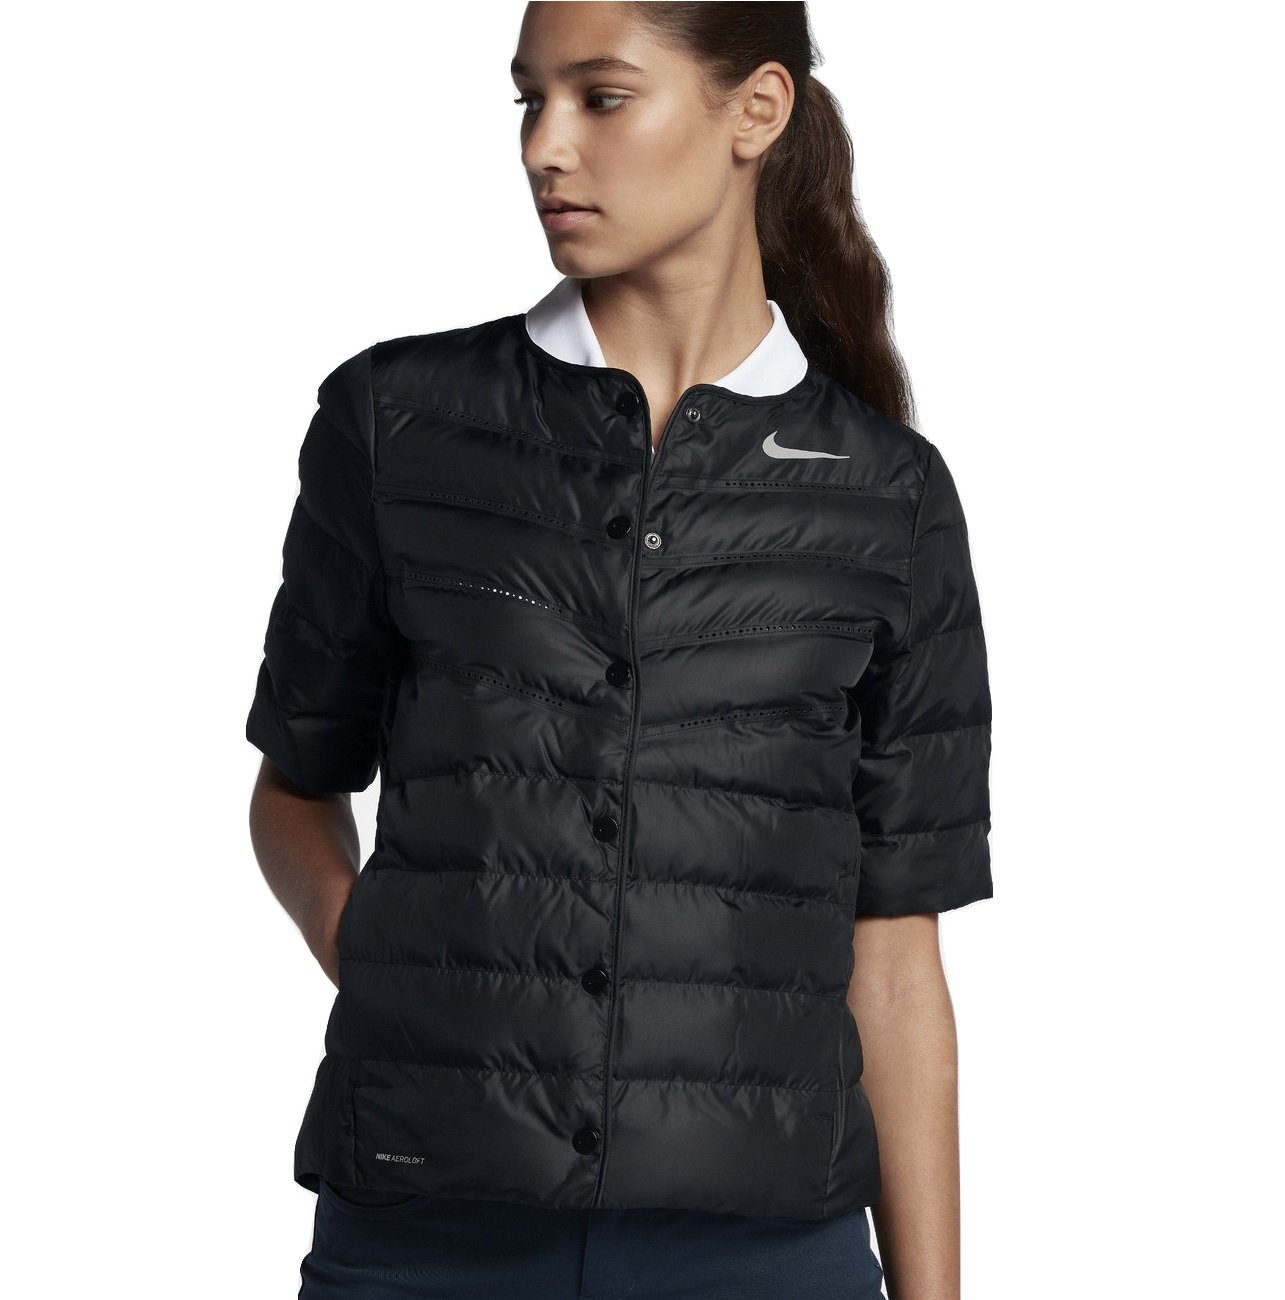 Nike Womens Aeroloft Half Sleeve Golf 